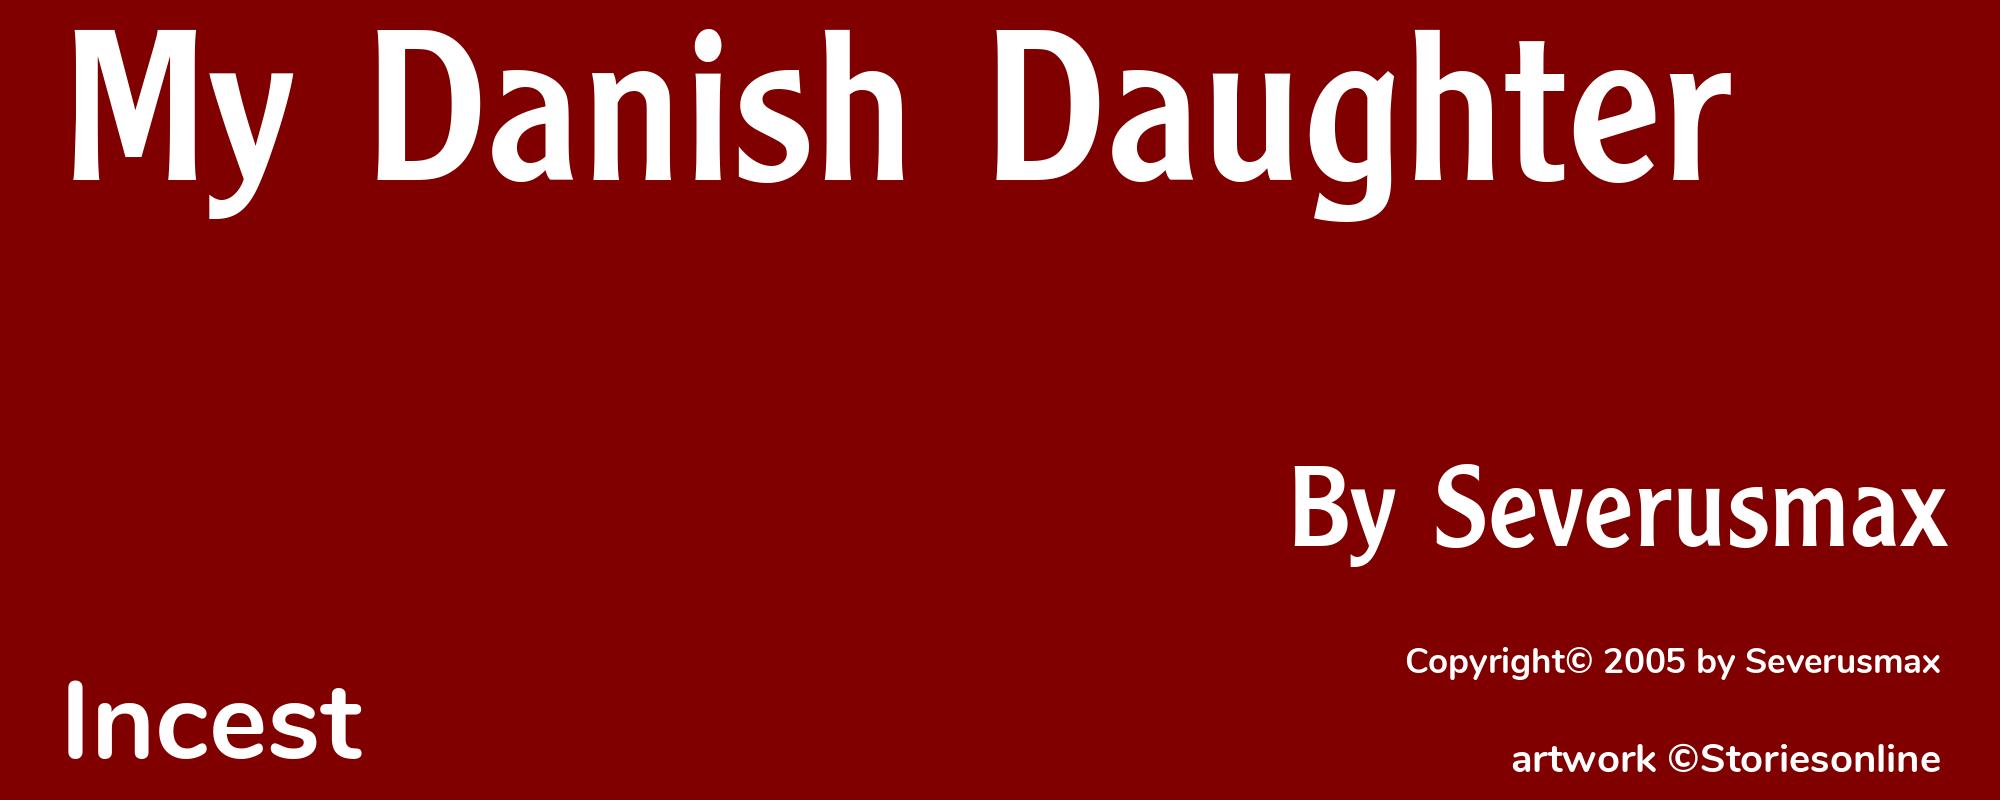 My Danish Daughter - Cover